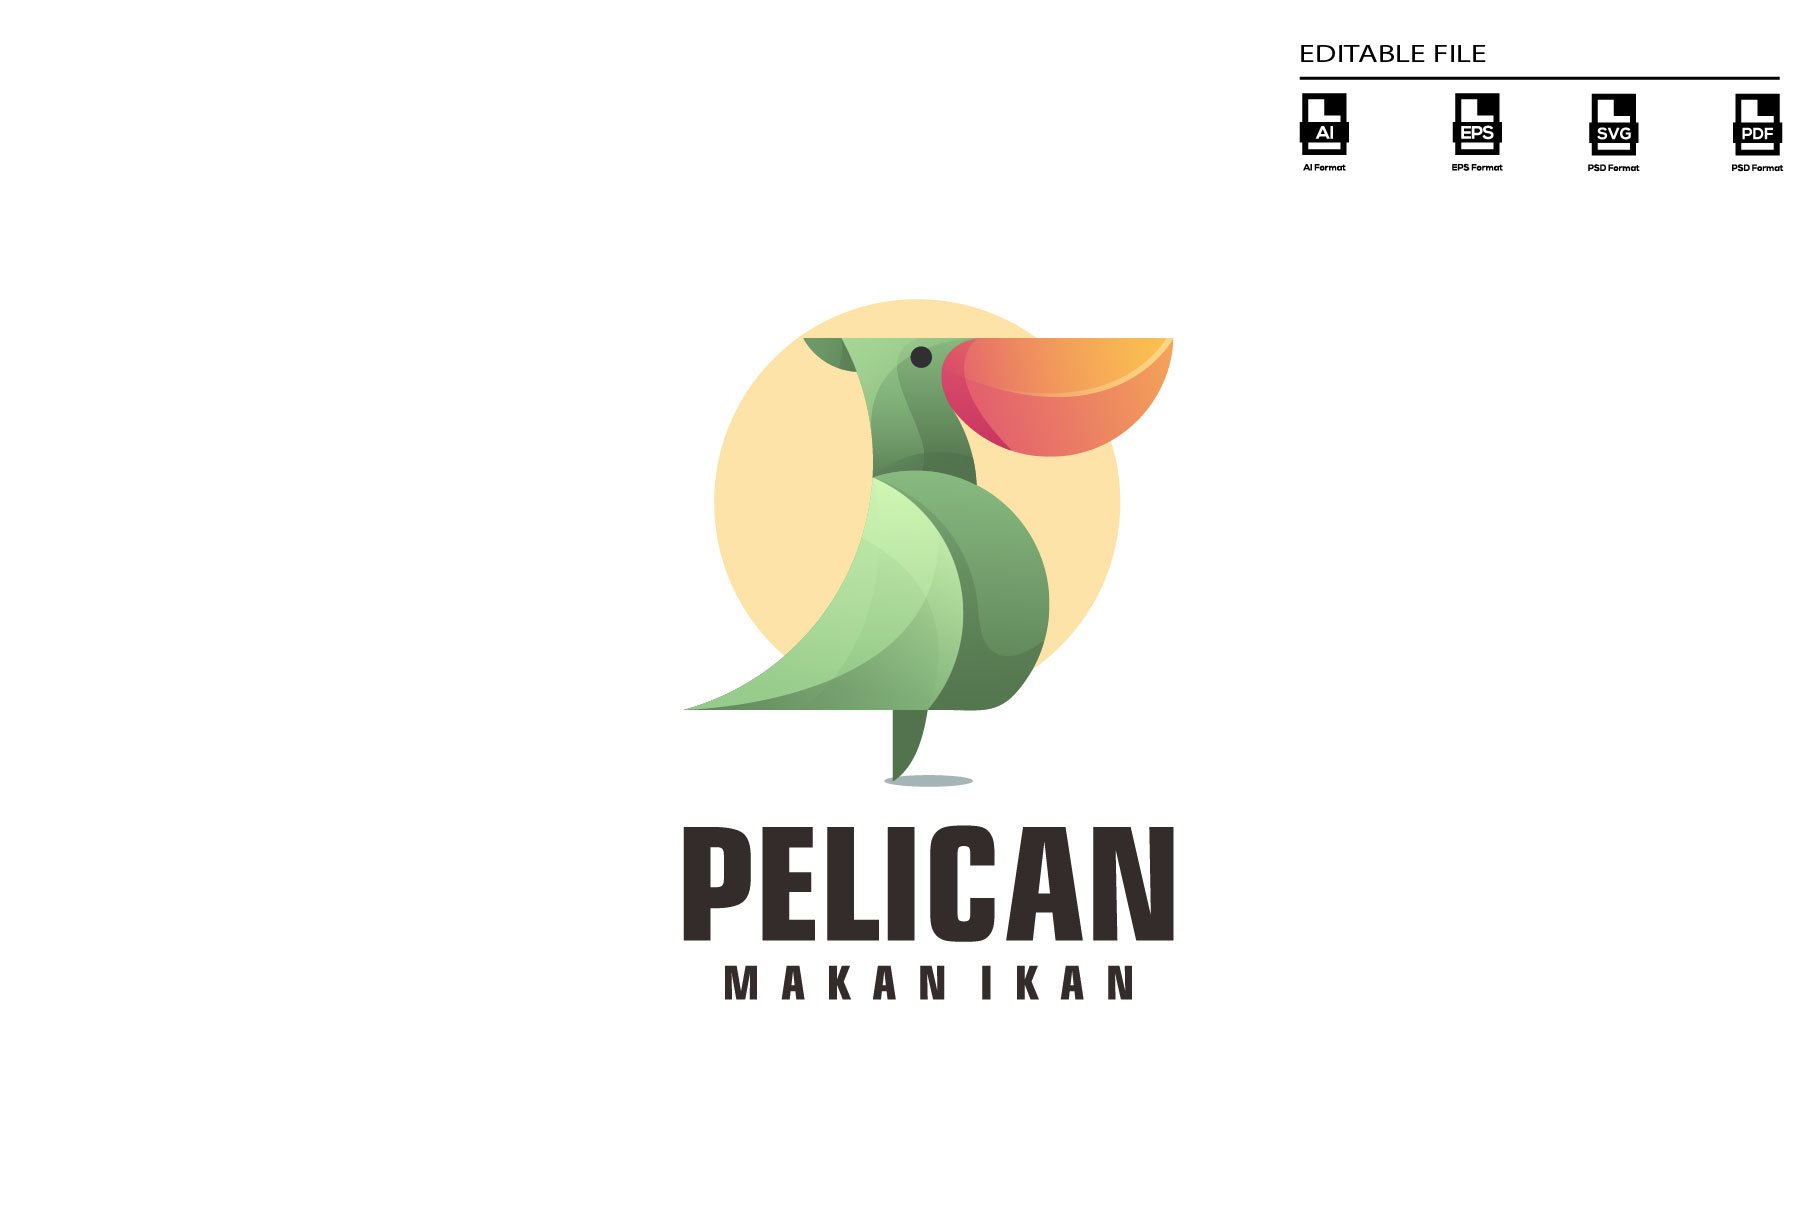 Pelican gradient logo cover image.